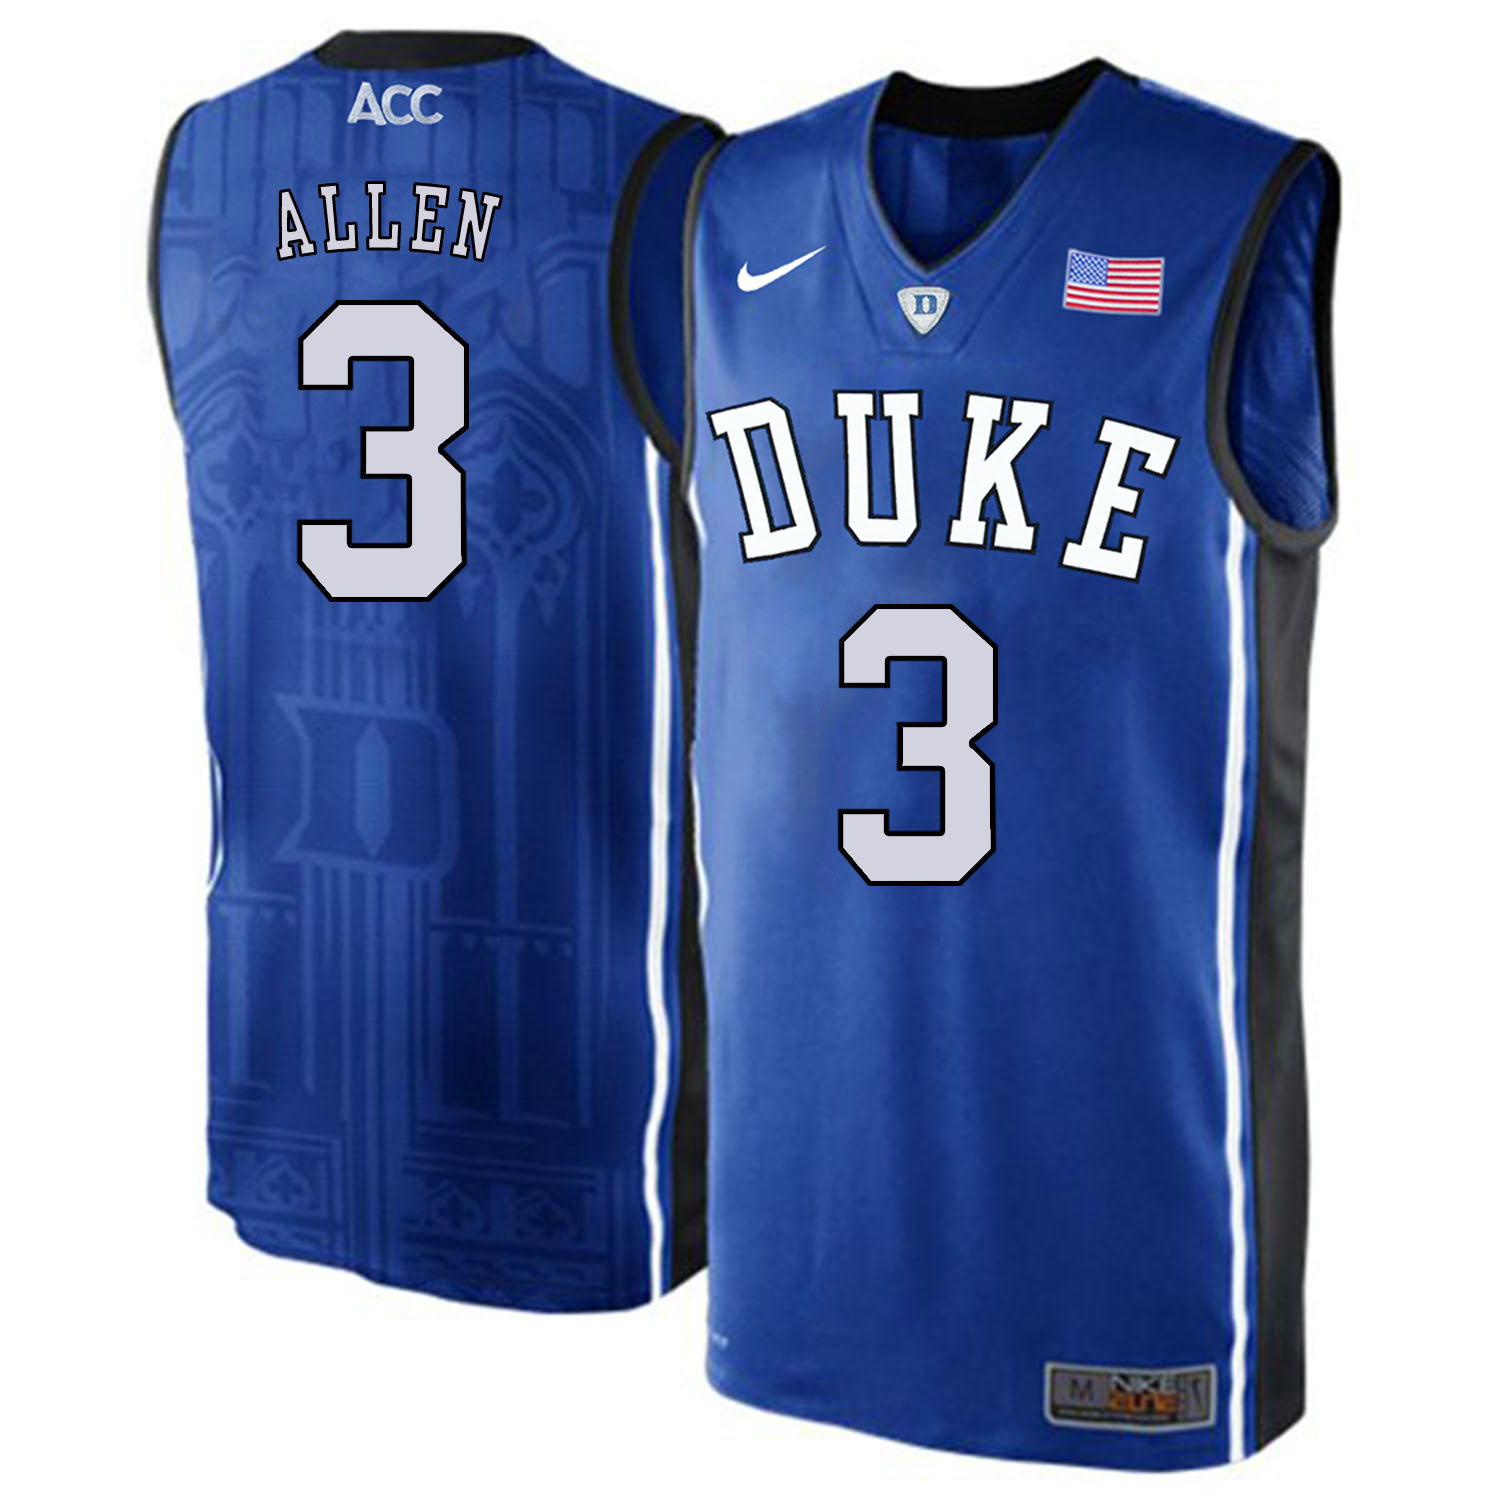 Duke Blue Devils 3 Garyson Allen Blue Elite Nike College Basketball Jersey